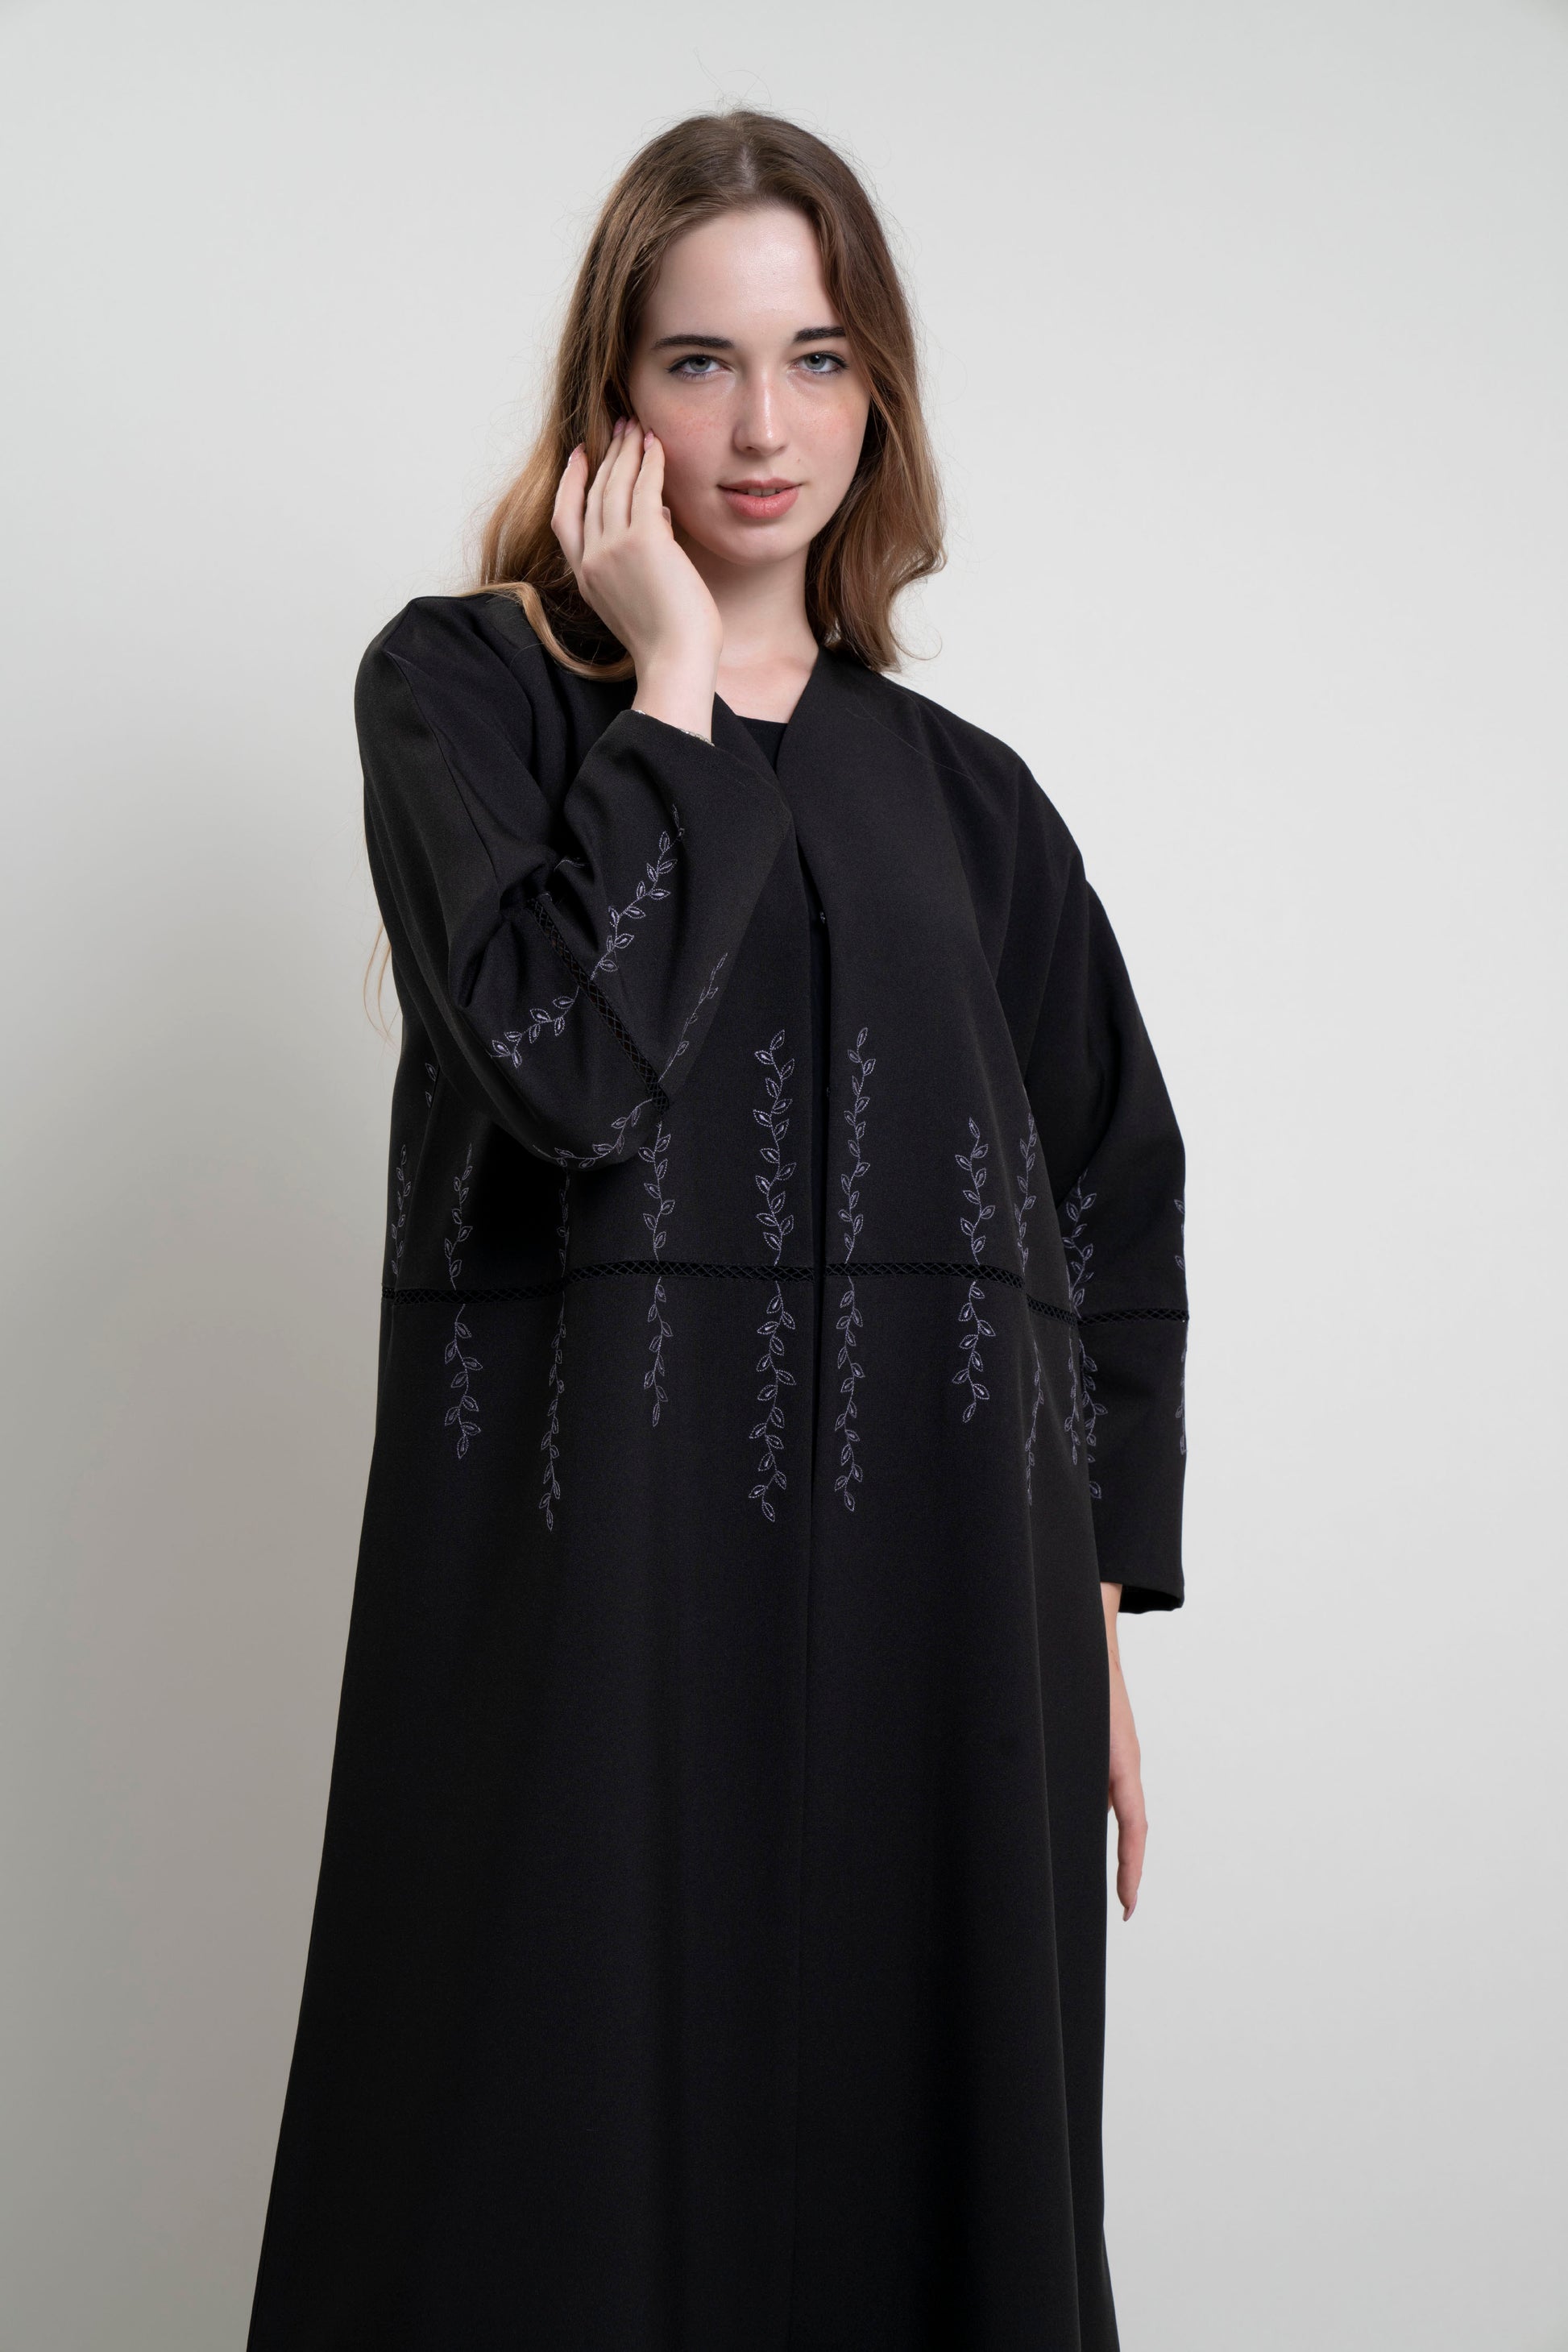 Black abaya for women for sale in Dubai